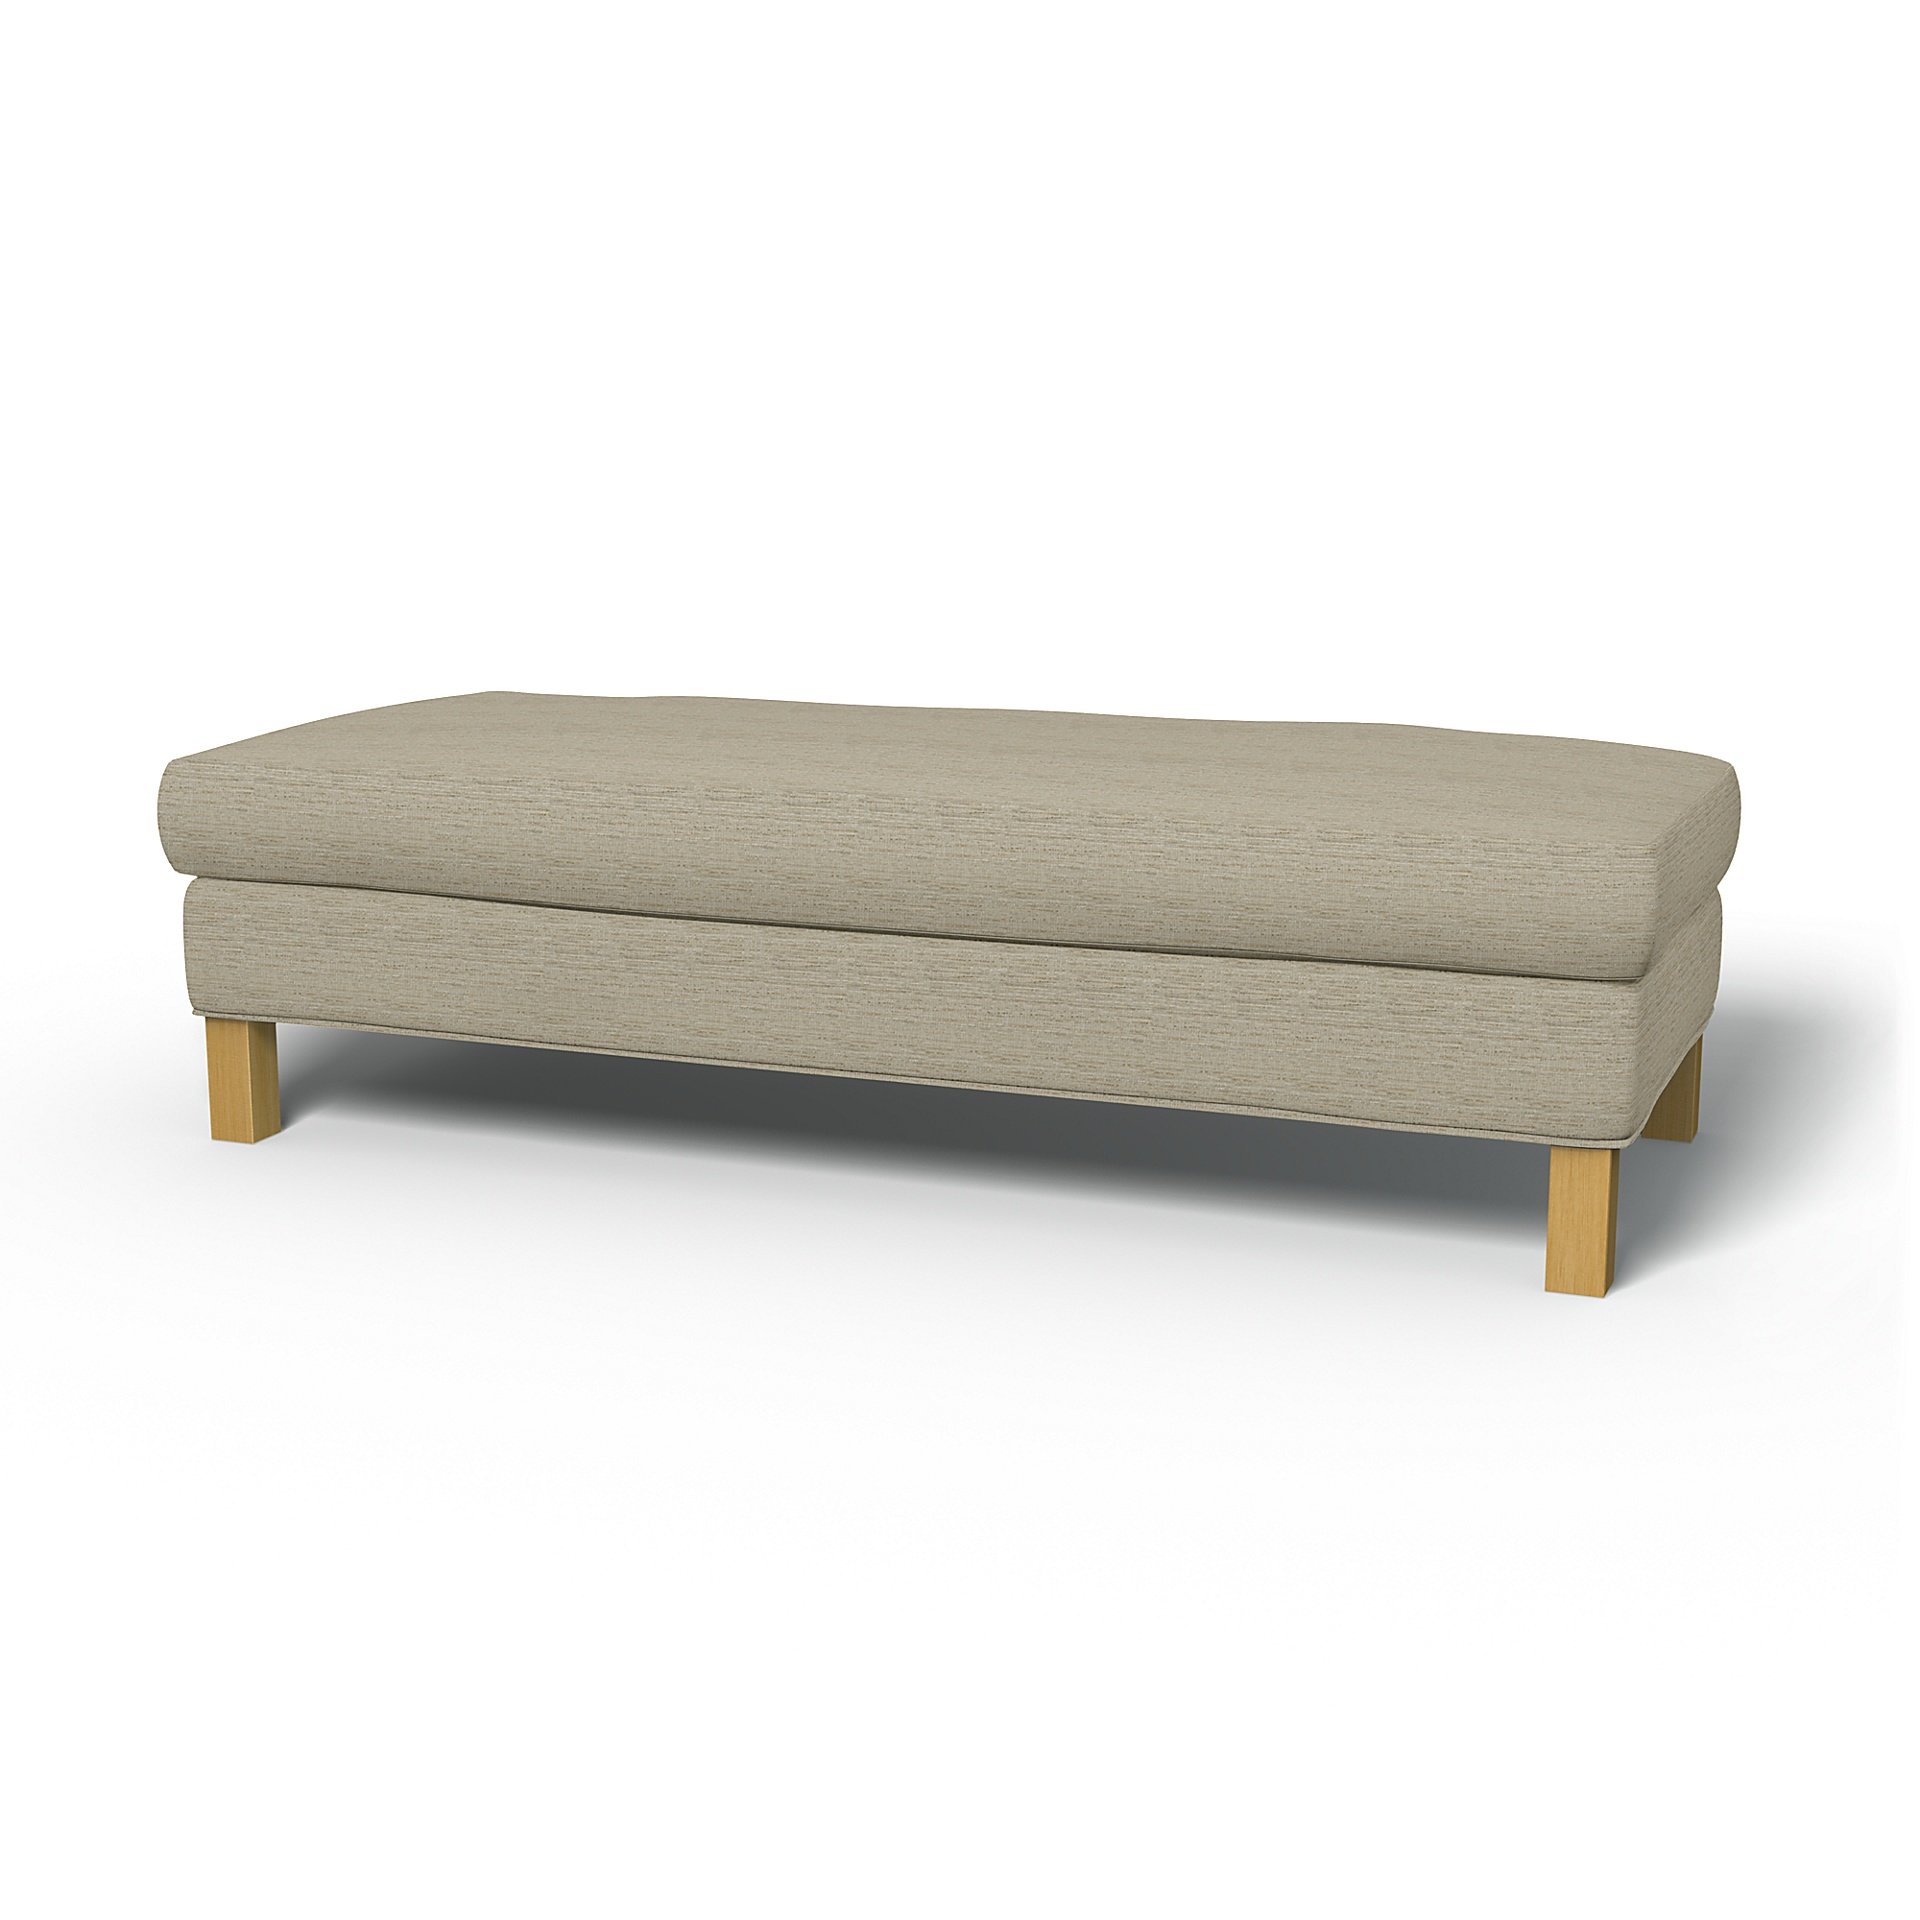 IKEA - Karlanda Bench Cover, Light Sand, Boucle & Texture - Bemz